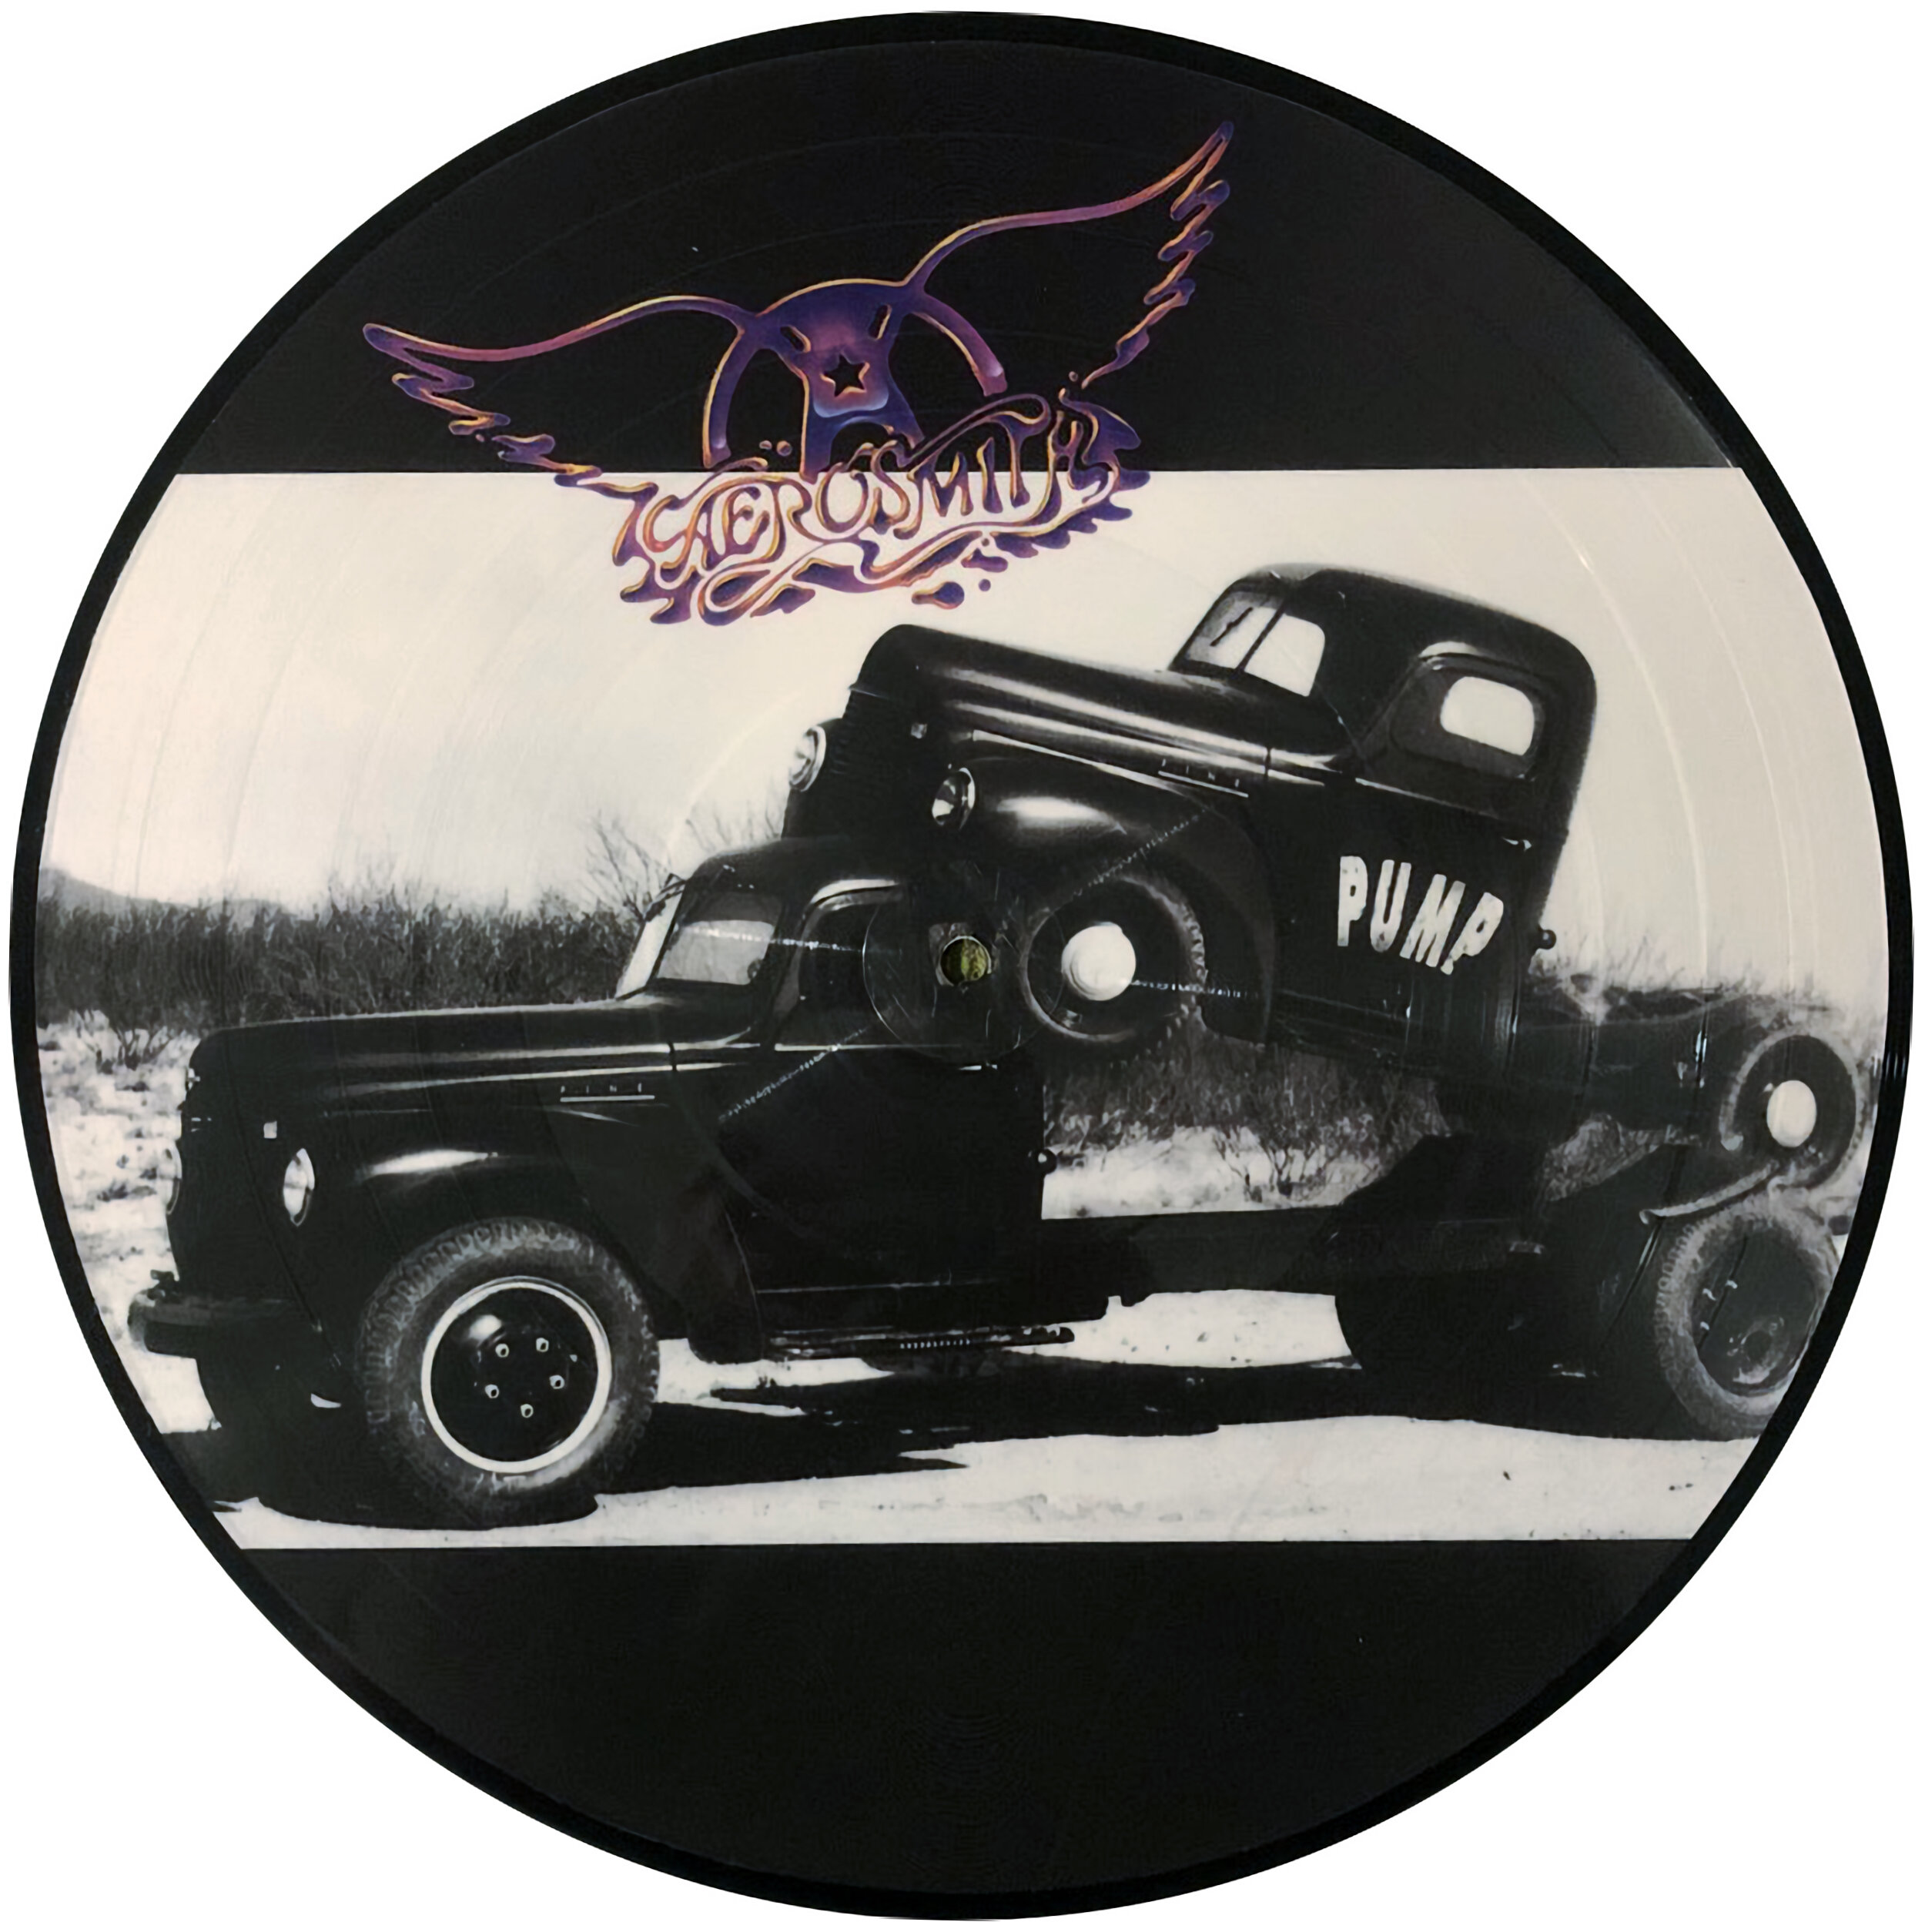 Aerosmith – Pump (Album Review) — Subjective Sounds